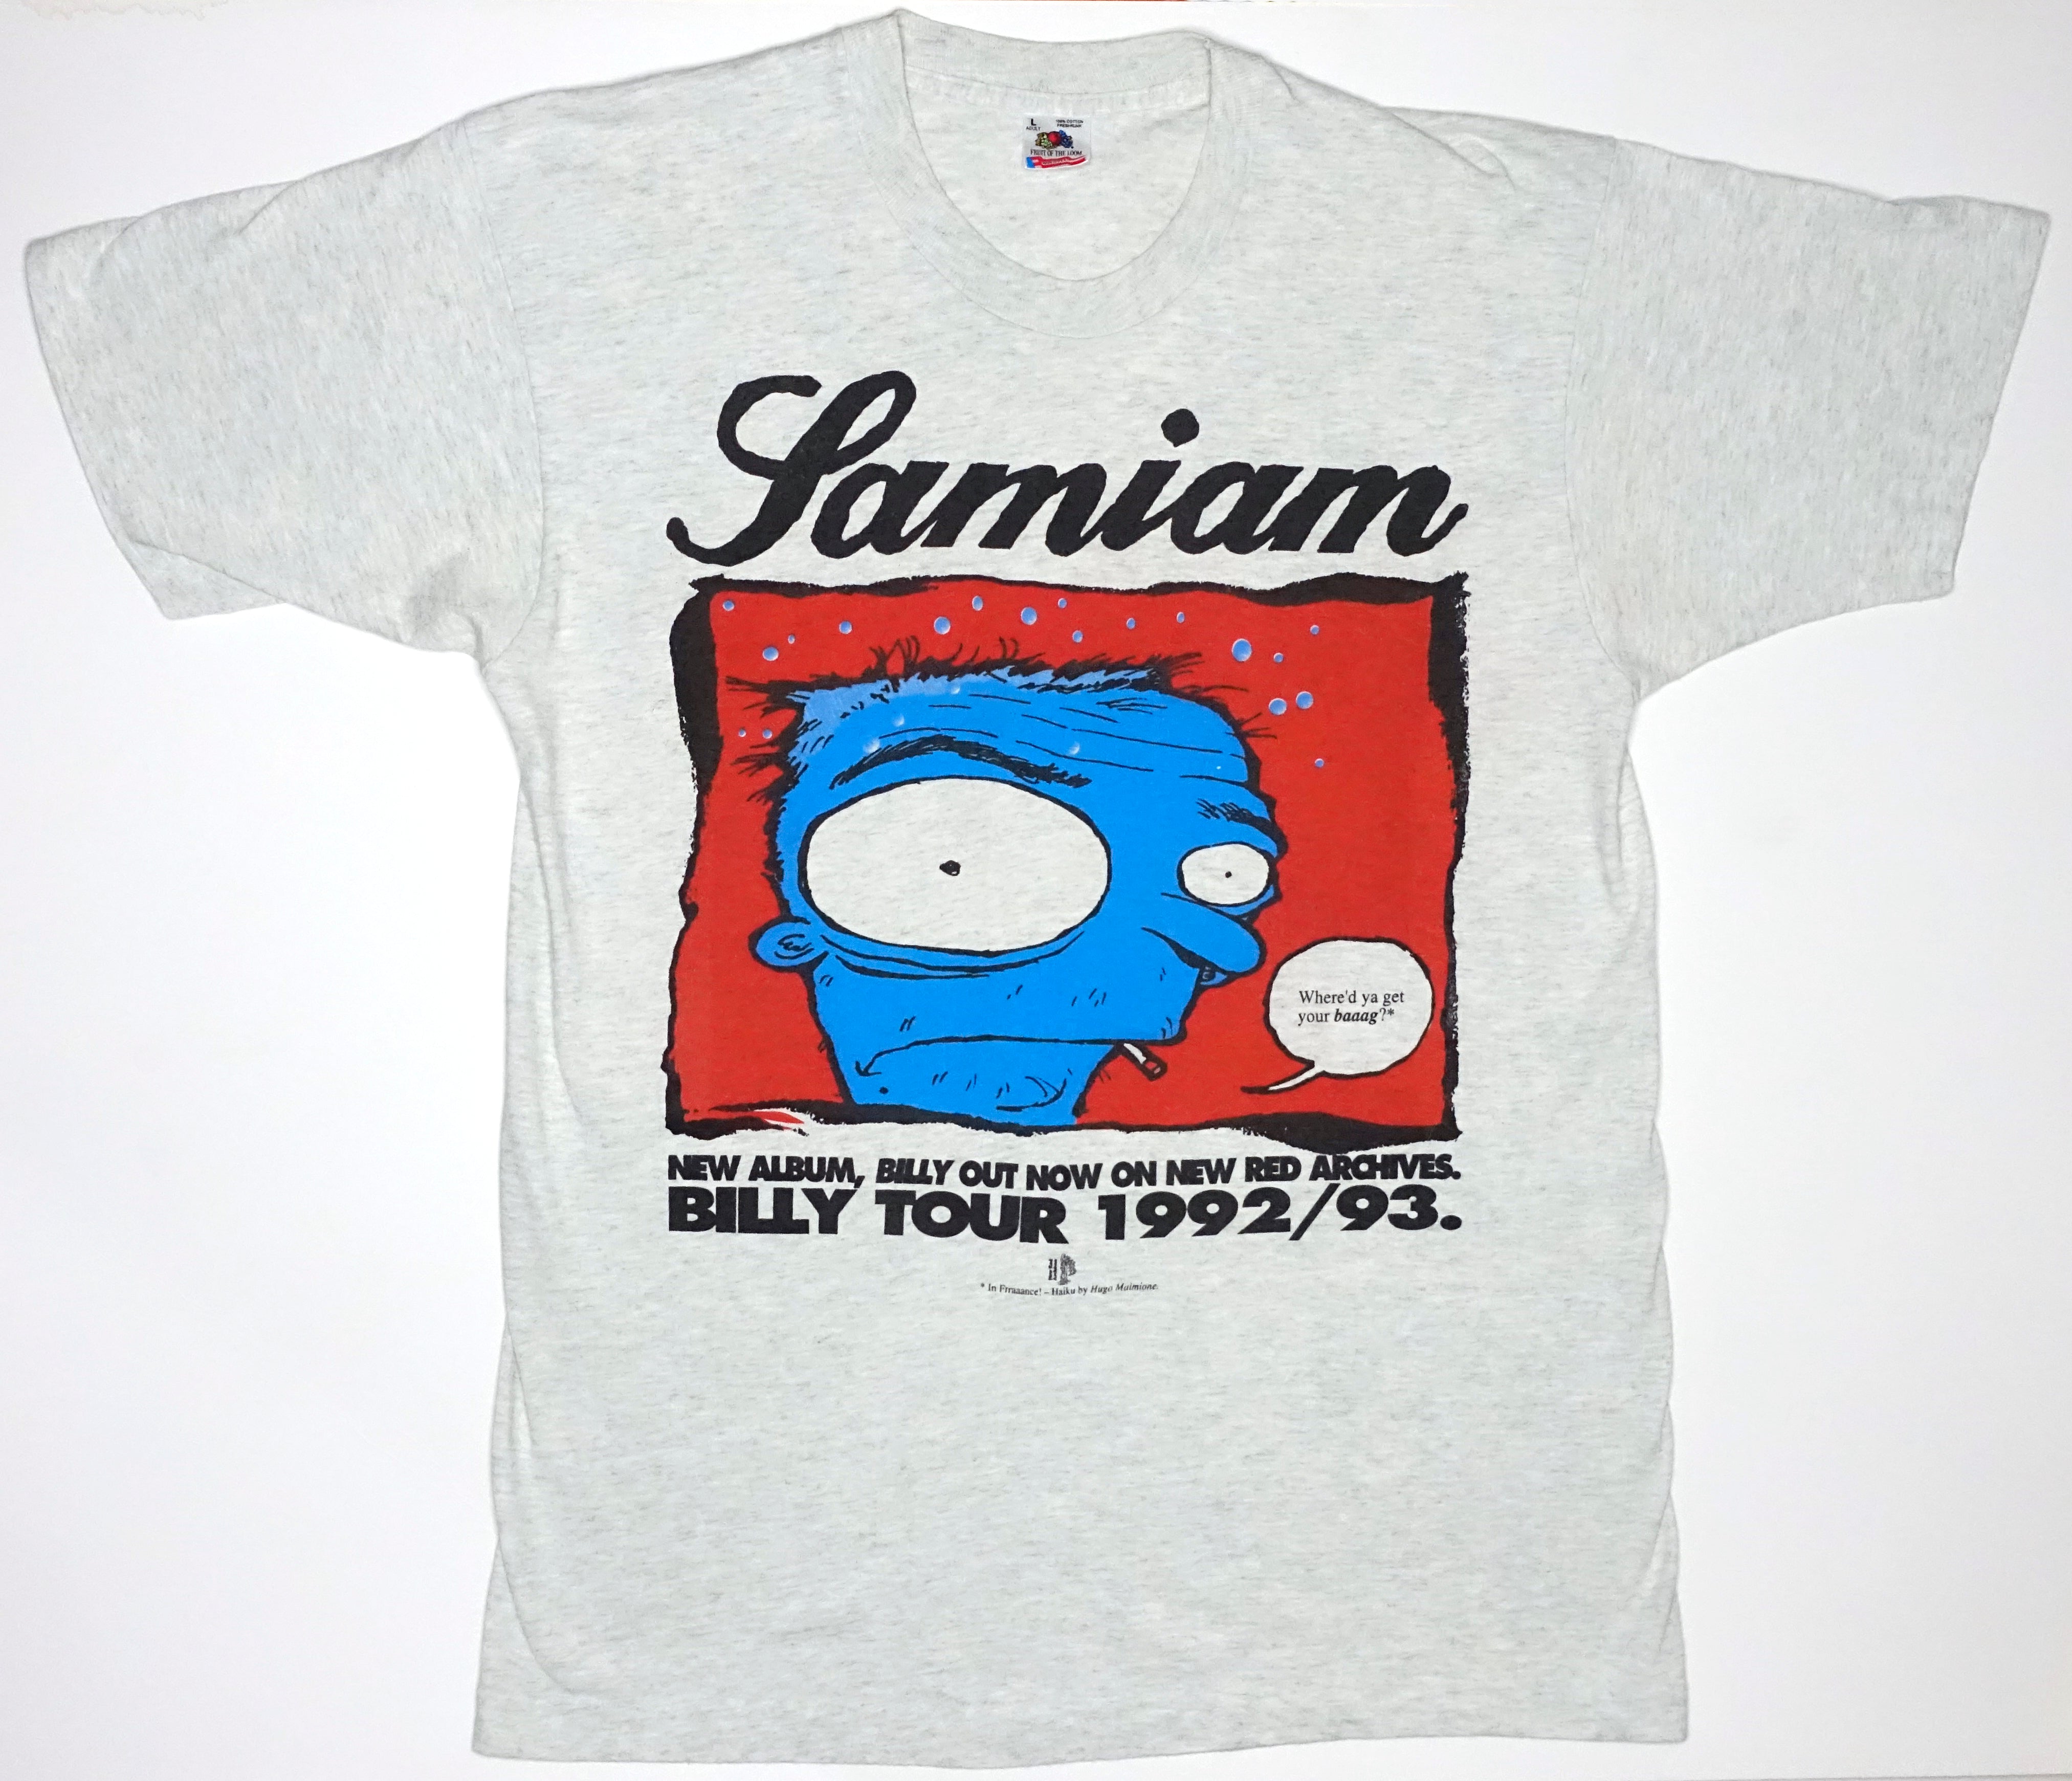 Samiam - Billy 1992/1993 Tour Shirt Size Large